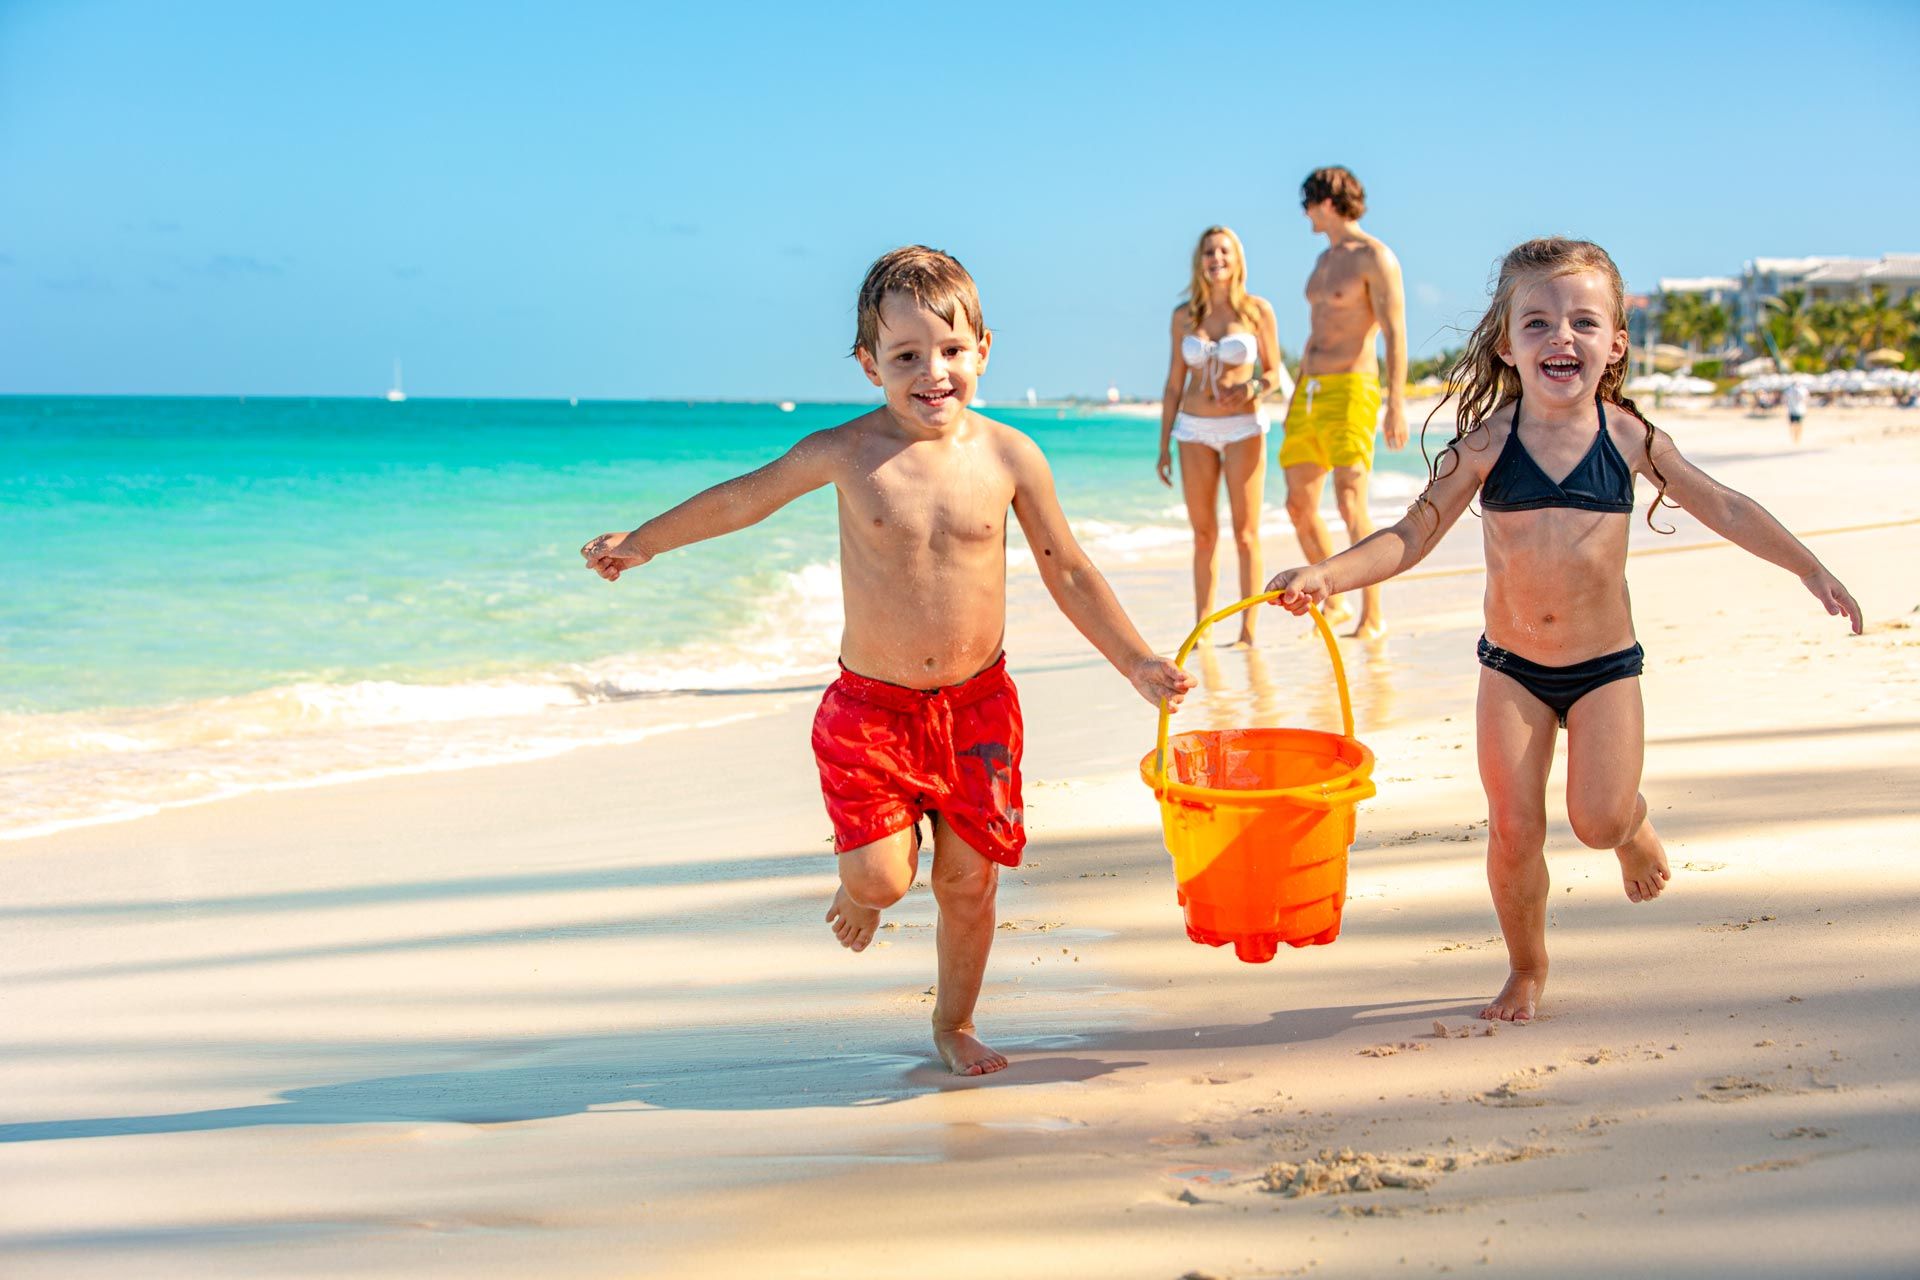 https://www.beaches.com/blog/content/images/2022/01/Beaches-Turks-and-Caicos-family-enjoying.jpg